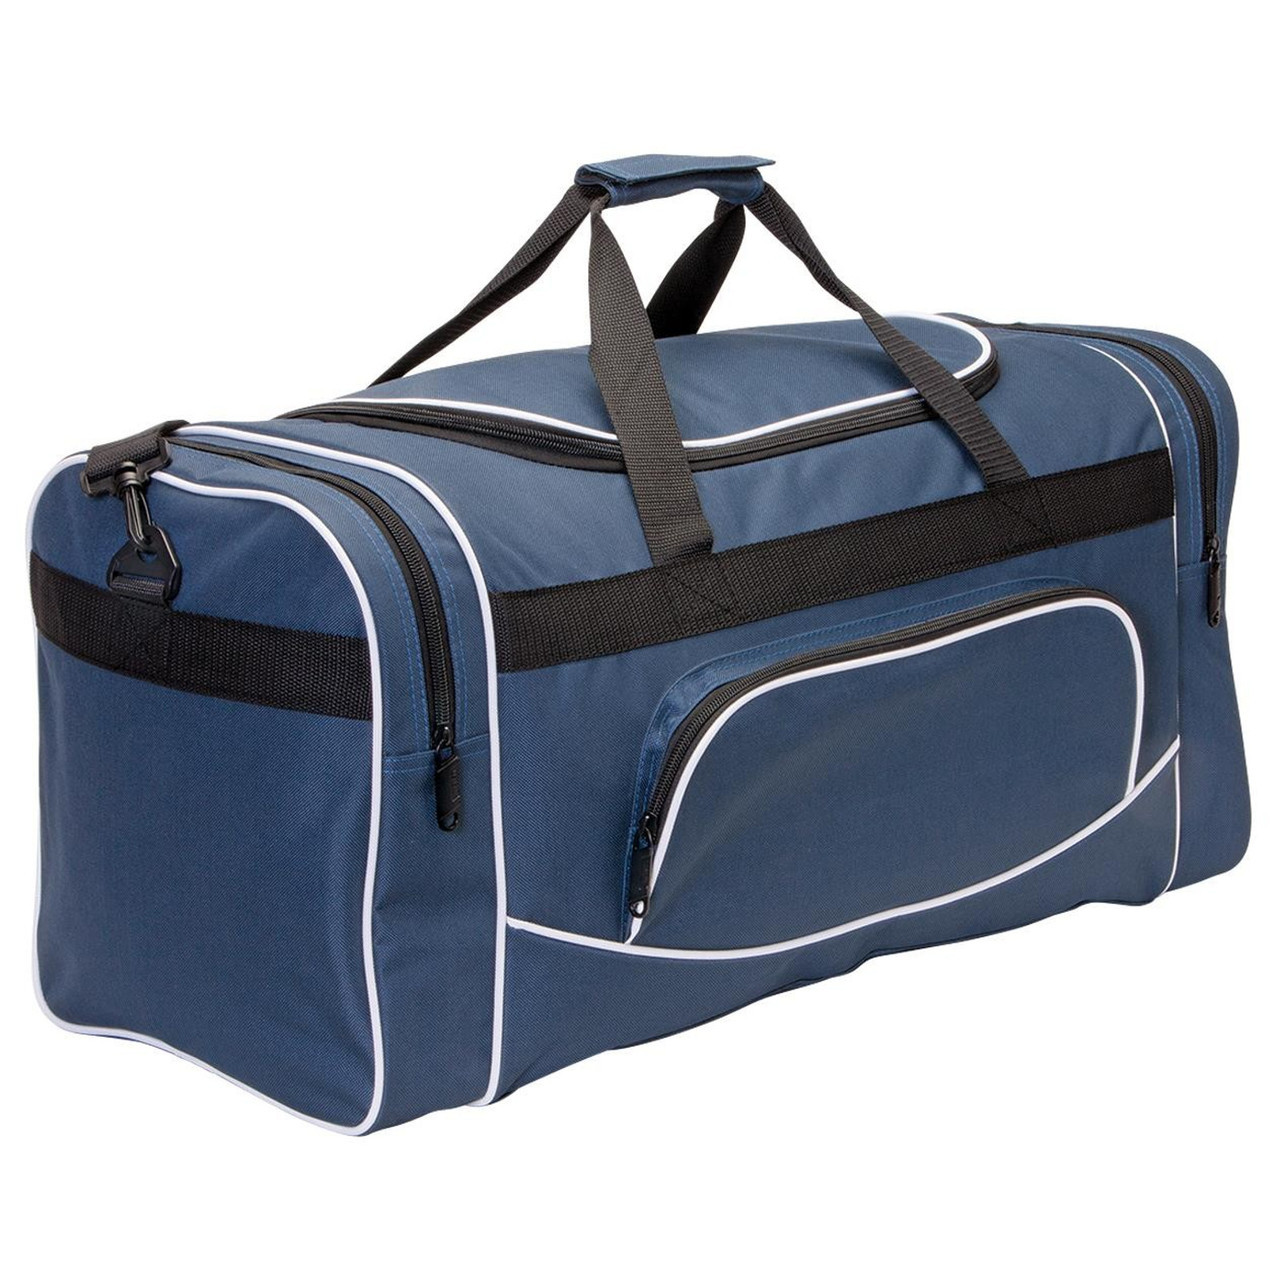 Contrast Large Gym Sports Team Bag | Wholesale Bulk Buy Bags Online